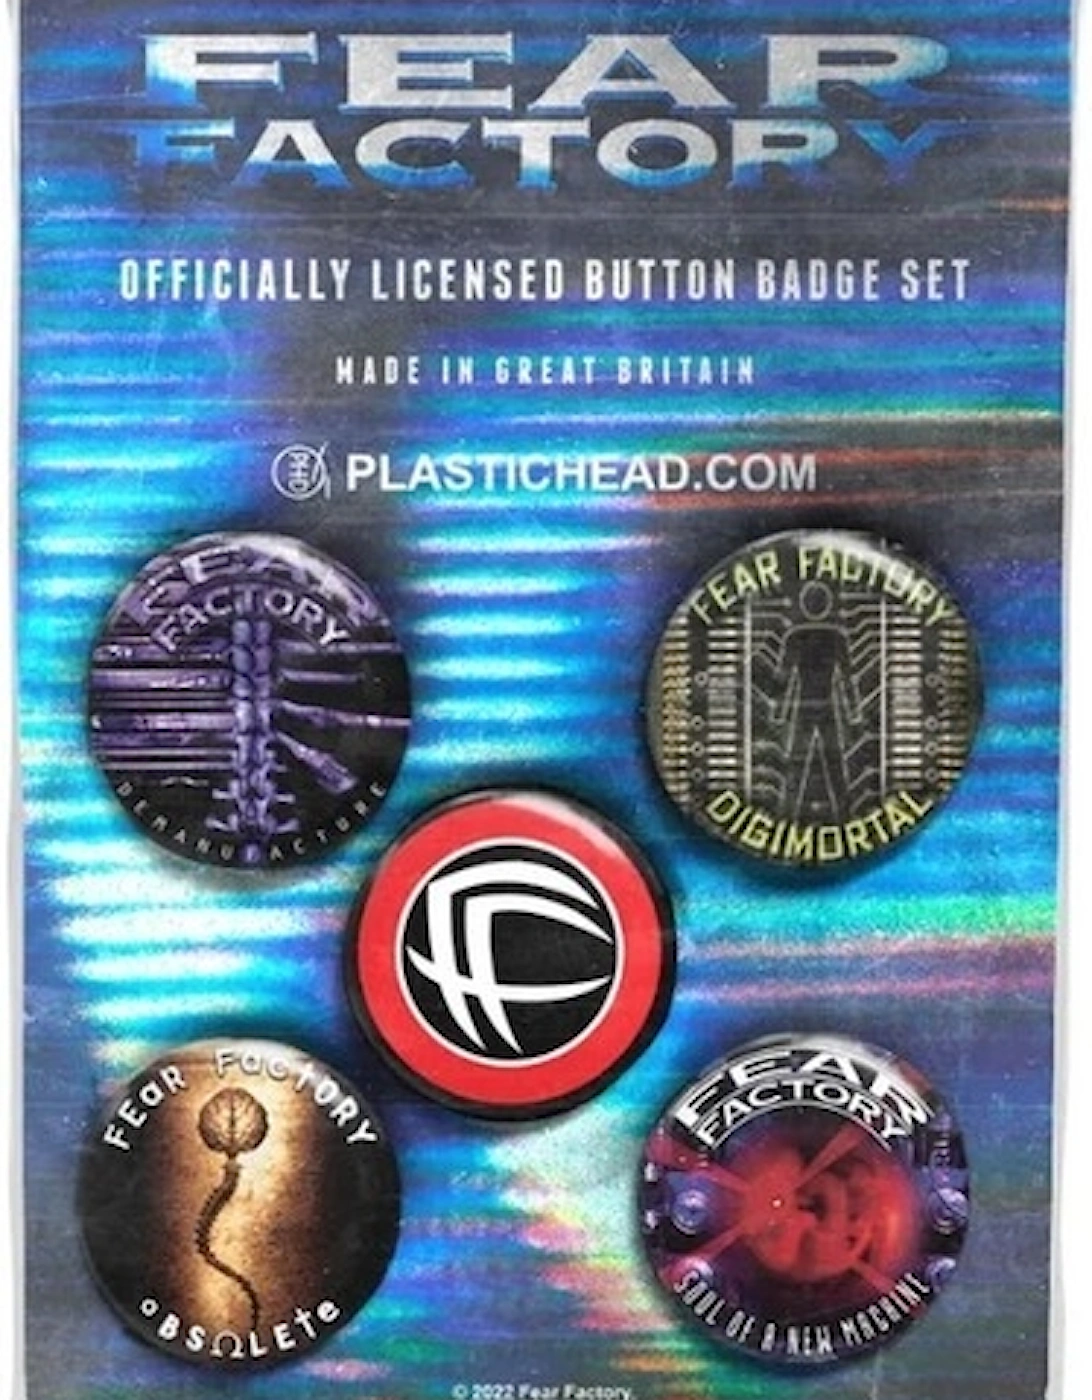 1992-2001 Albums Badge Set (Pack of 5), 2 of 1